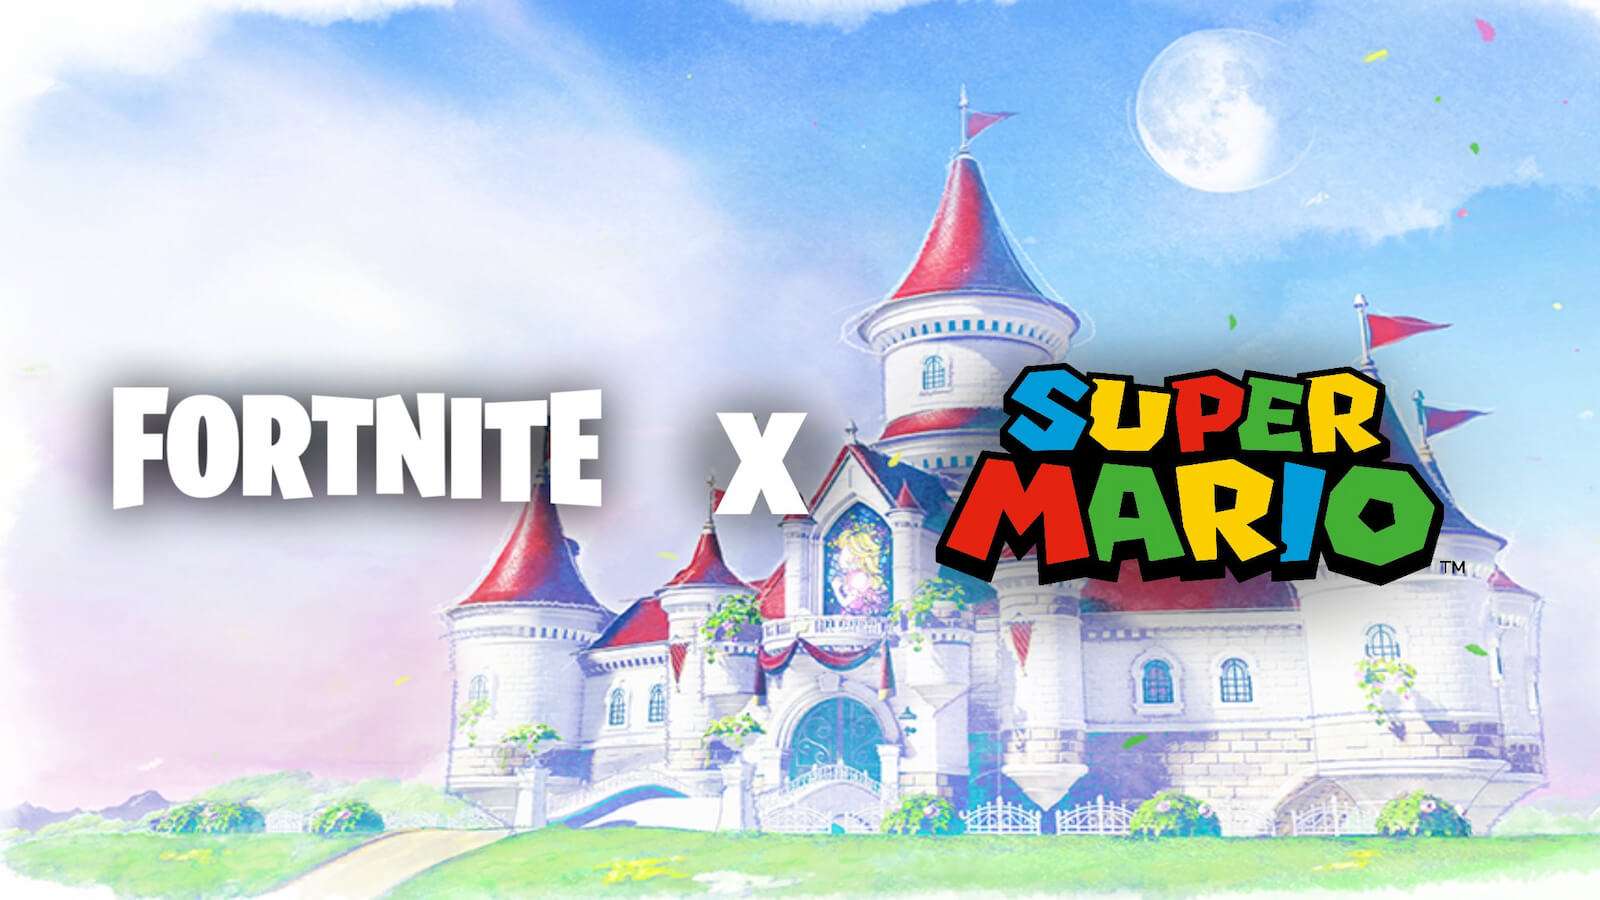 Fortnite x Super Mario concept art